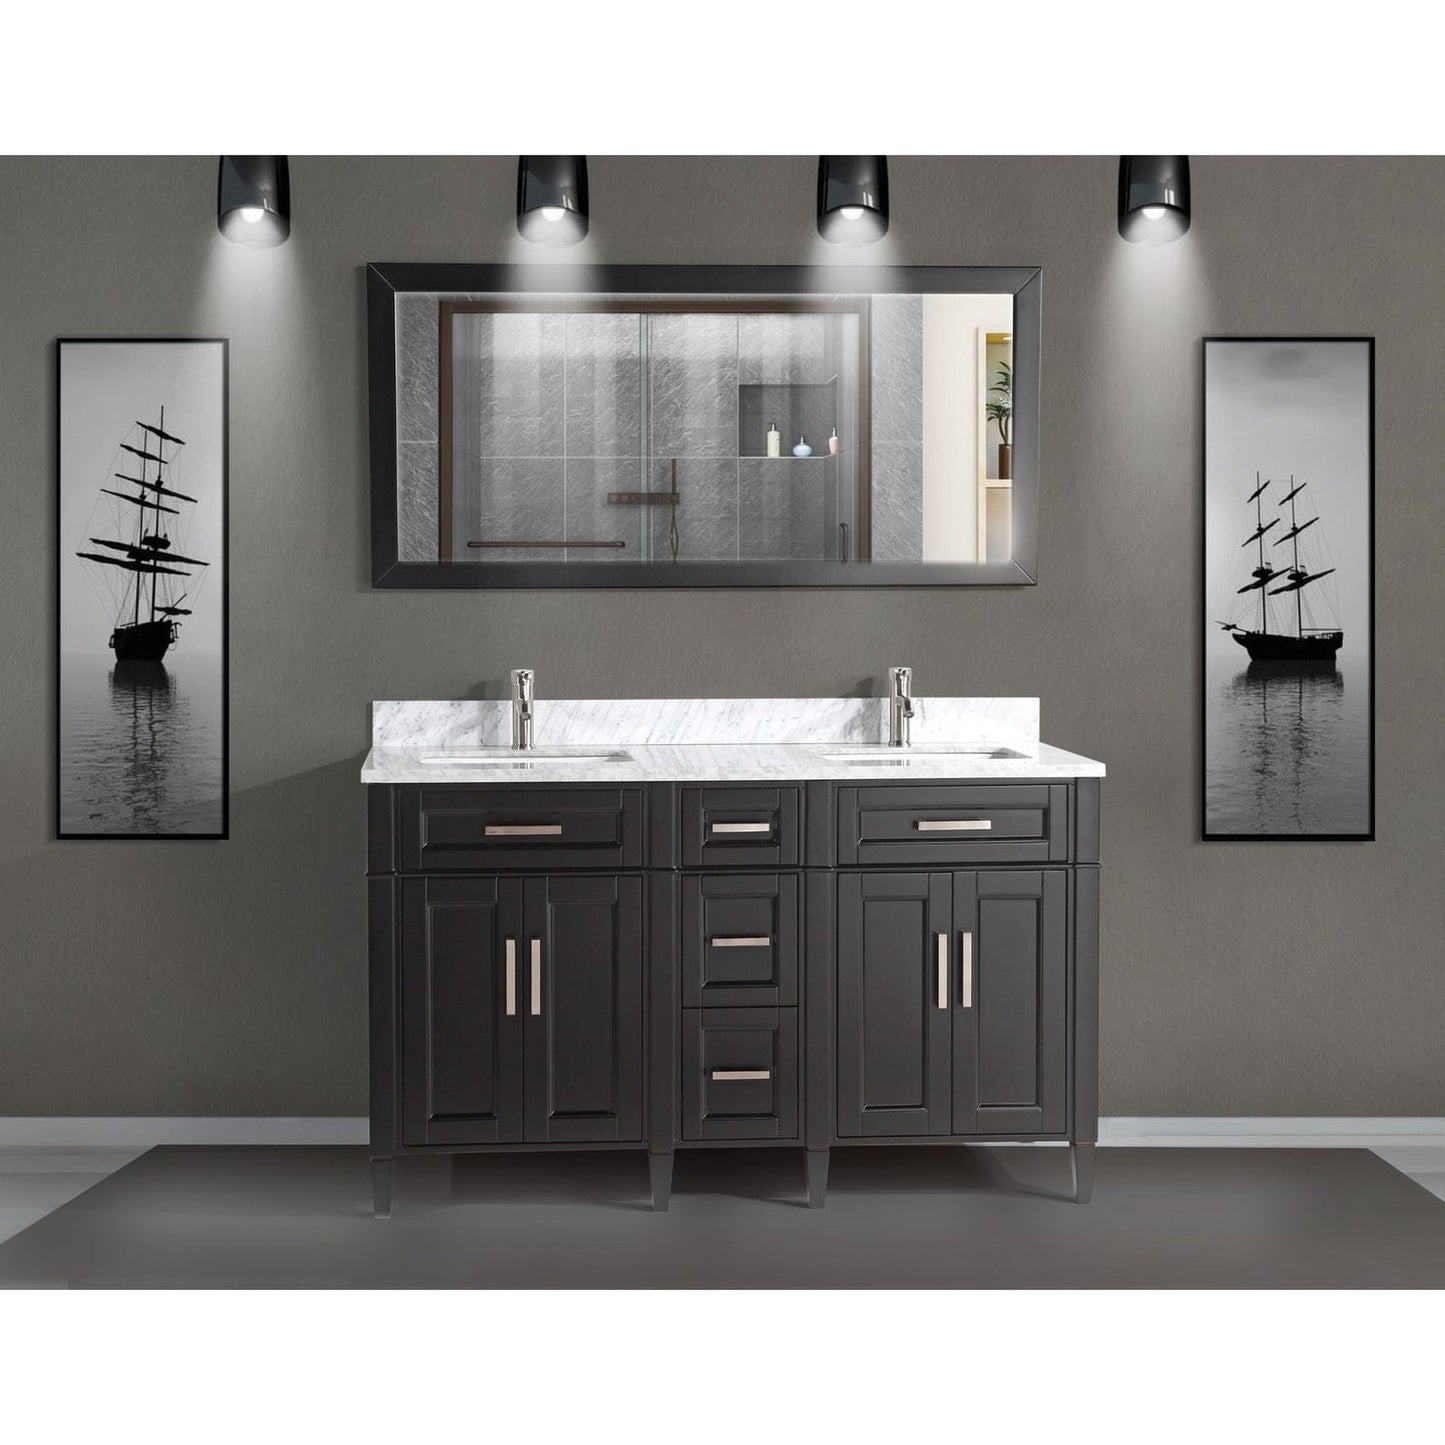 Vanity Art Savona 60" Double Espresso Freestanding Modern Bathroom Vanity Set With Carrara Marble Top, Undermount Ceramic Sink, 5 Dovetail Drawer Cabinet, Backsplash and Mirror